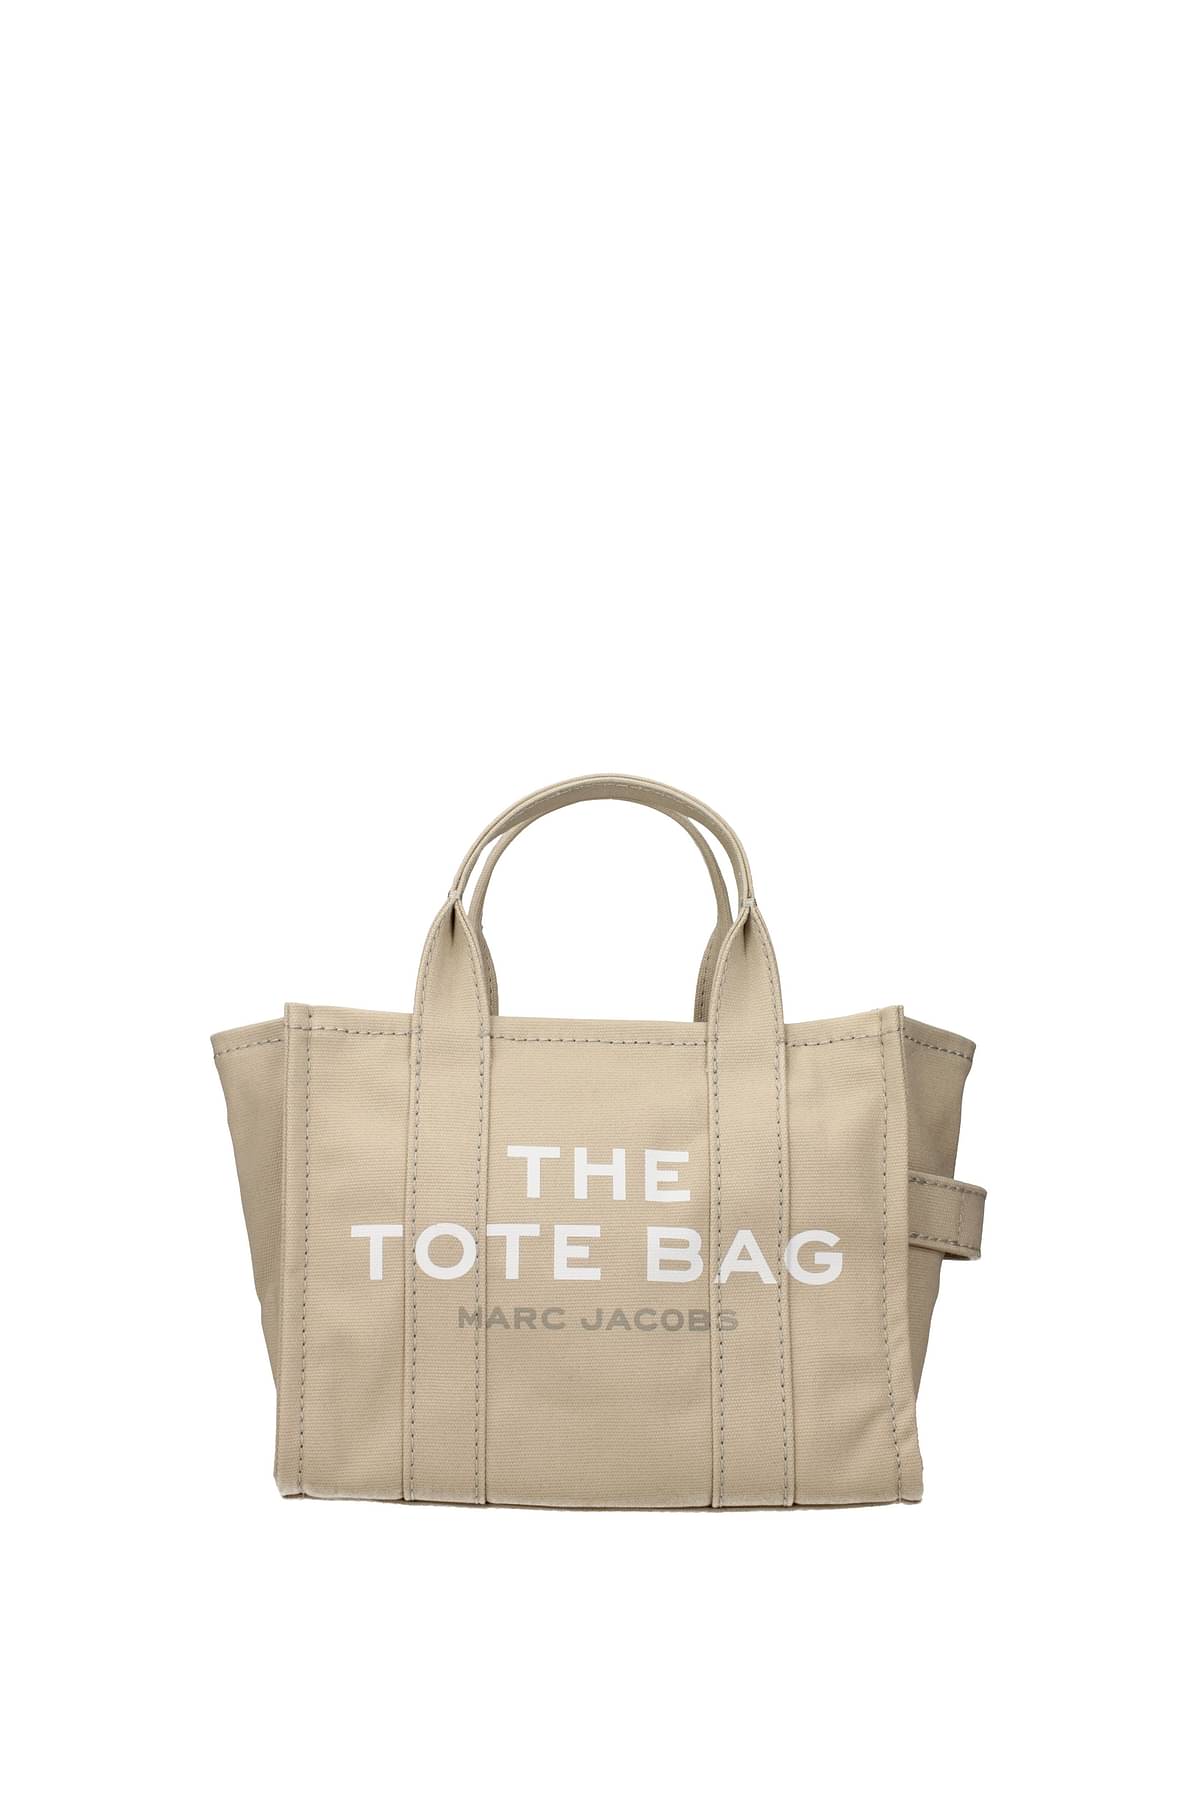 Marc Jacobs Handbags the tote bag Women M0016493260 Fabric Beige Light ...